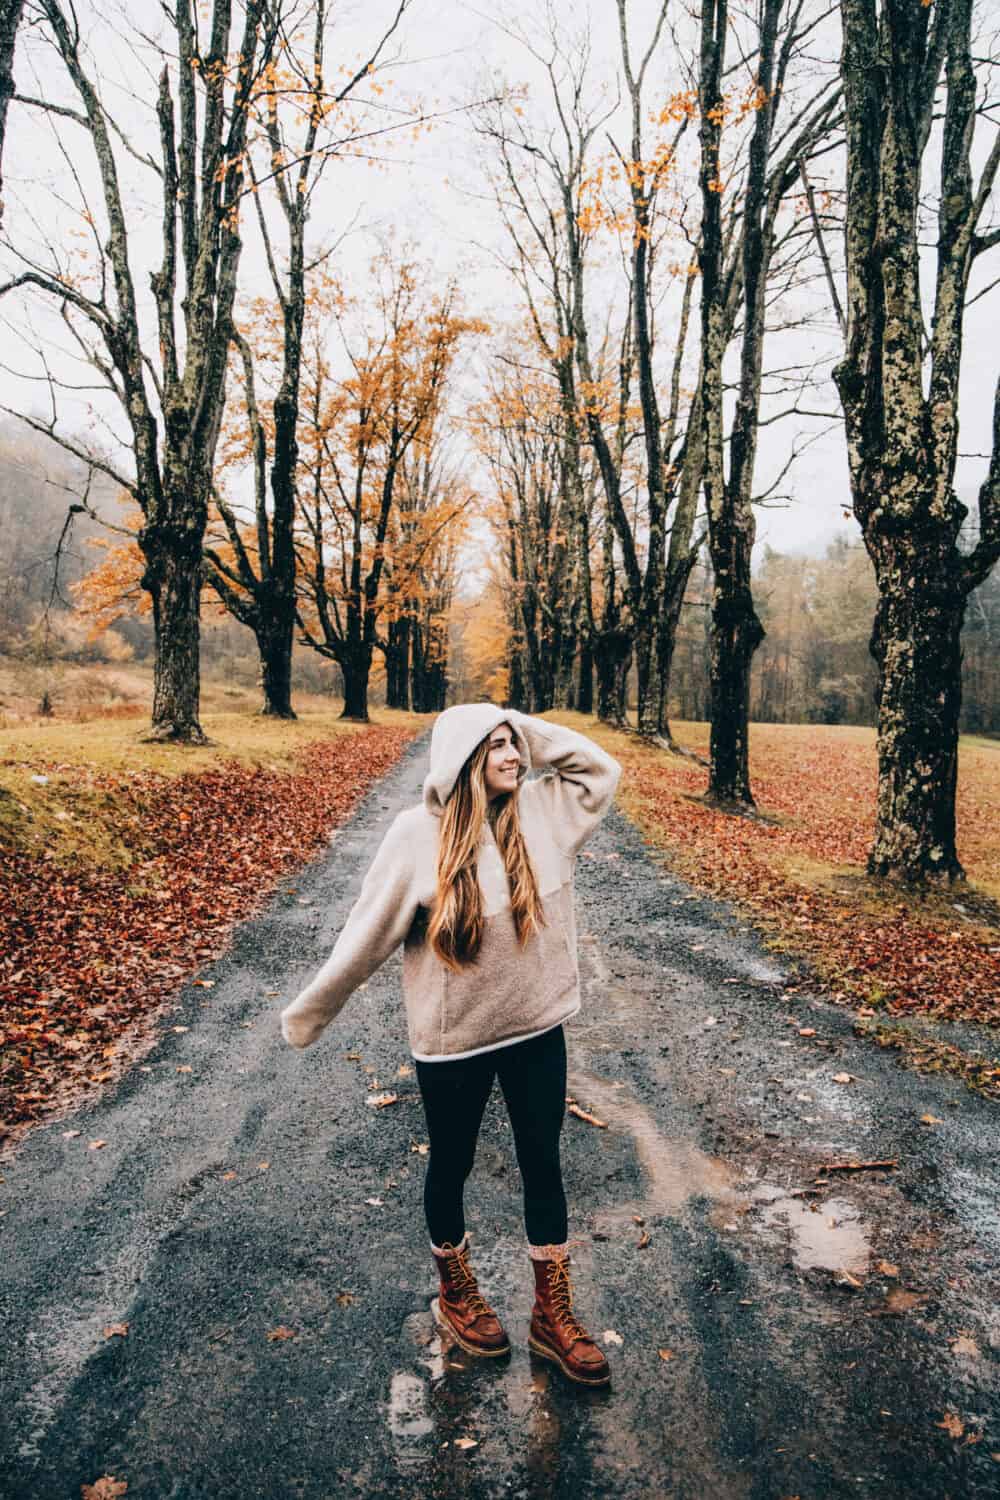 October Outdoor Holidays - Emily Mandagie walking through autumn leaves